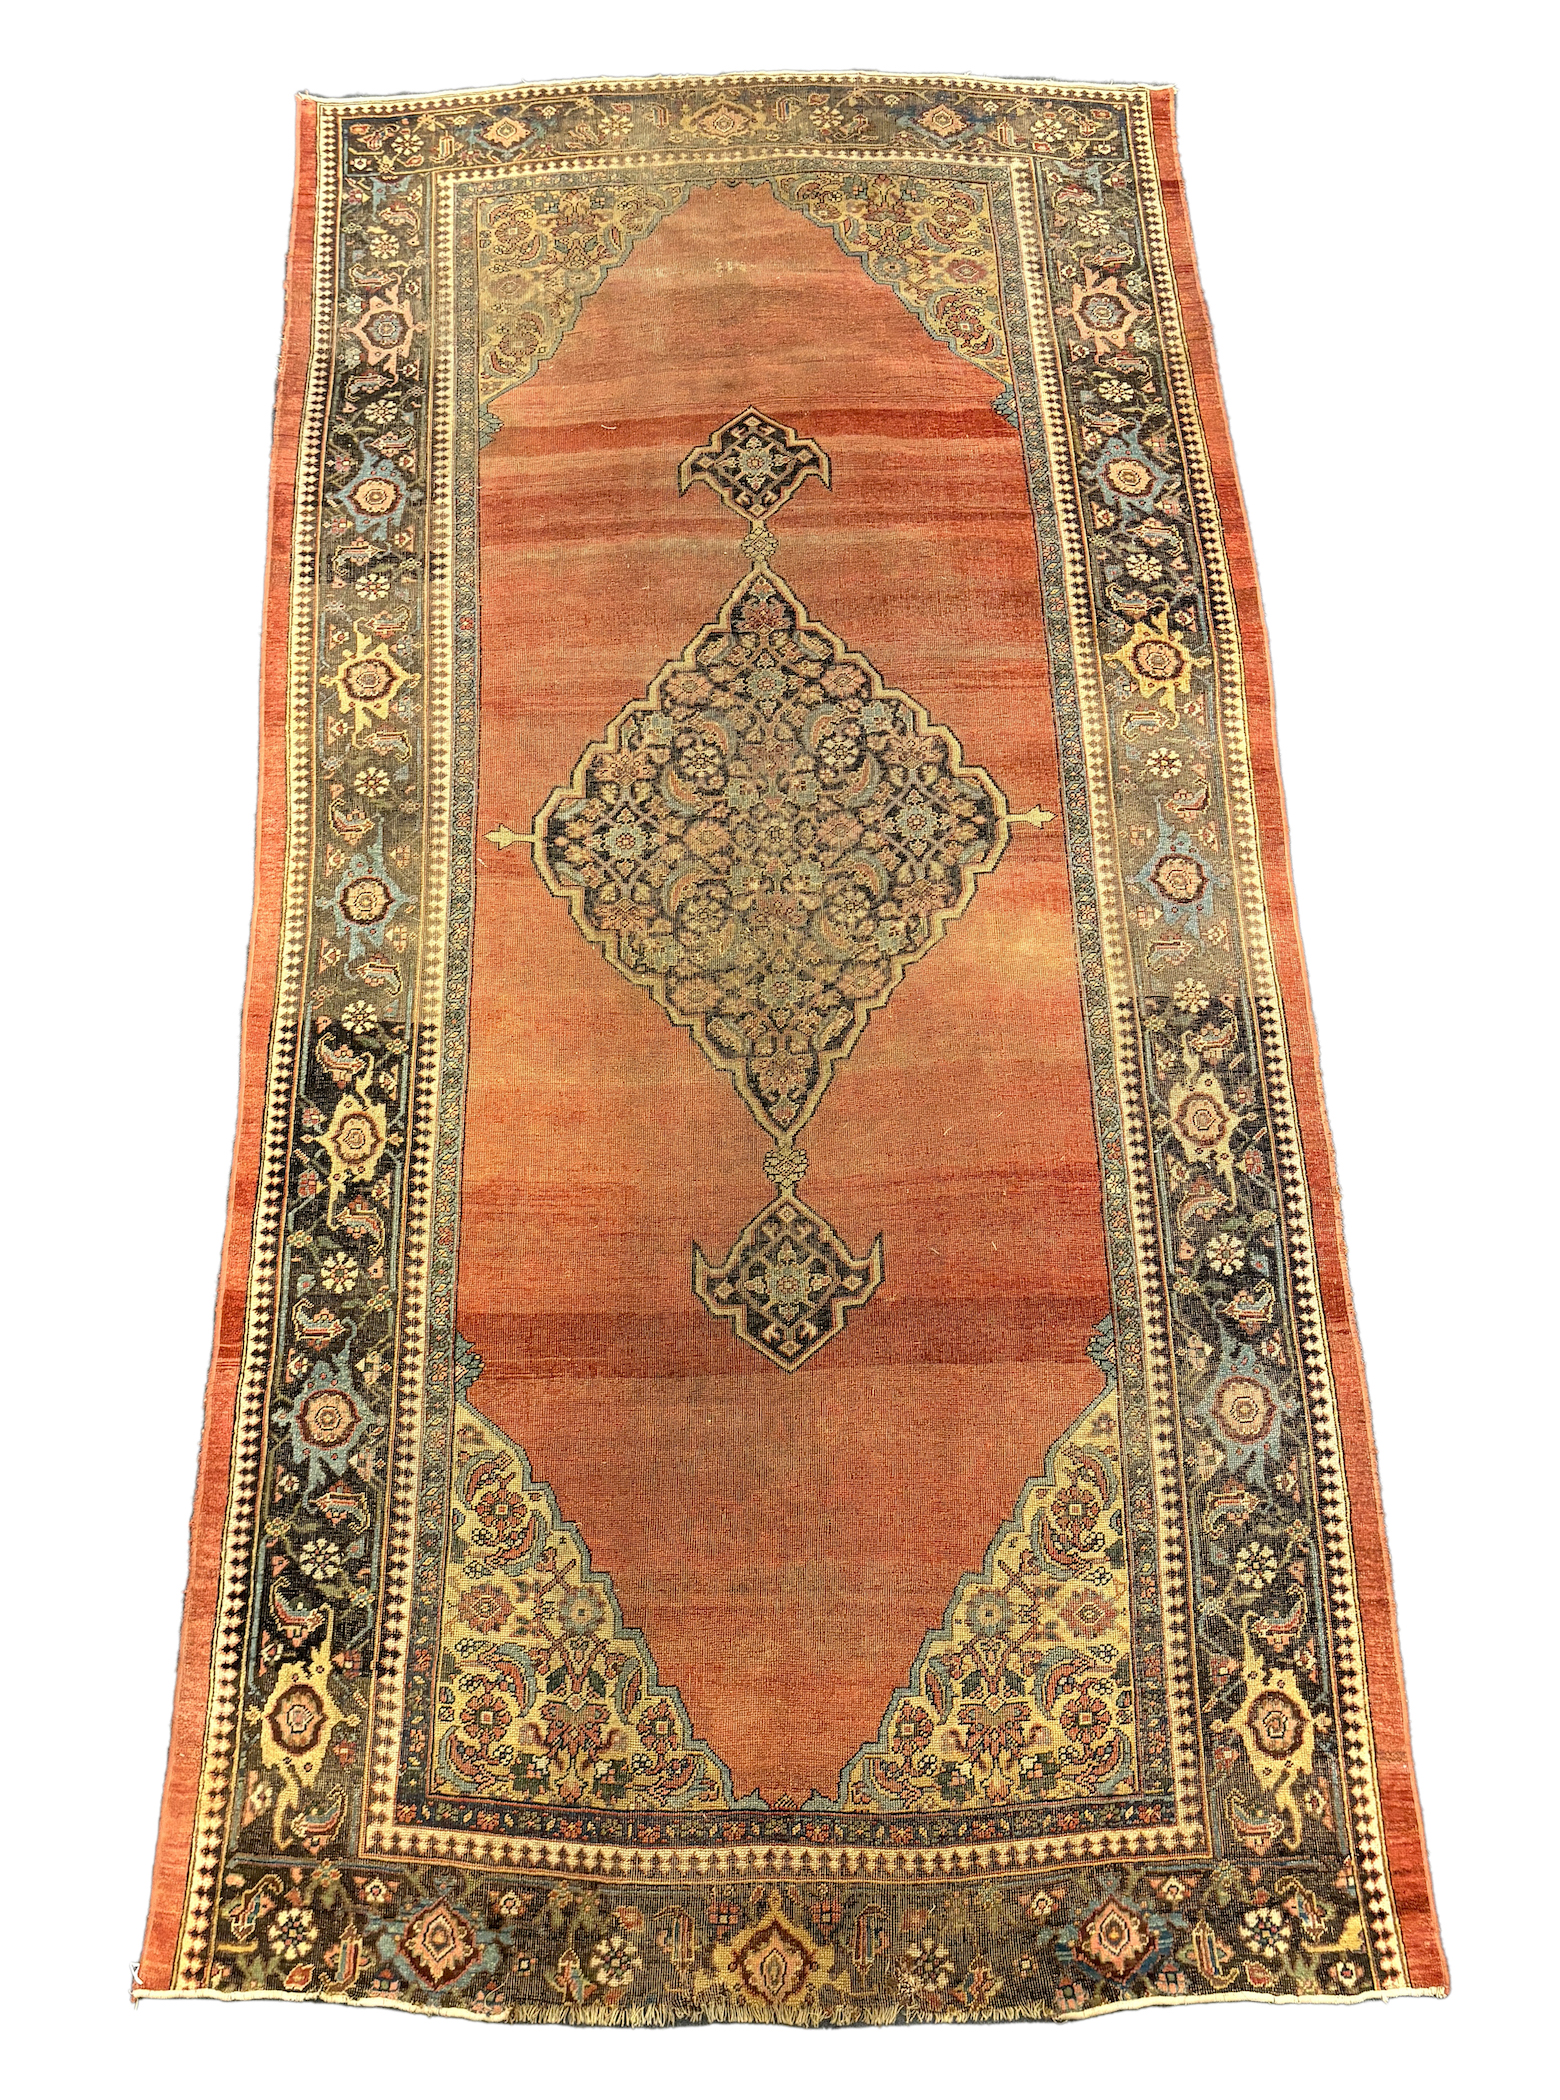 An antique Bidjar carpet 365 x 185cm                                                                                                                                                                                        